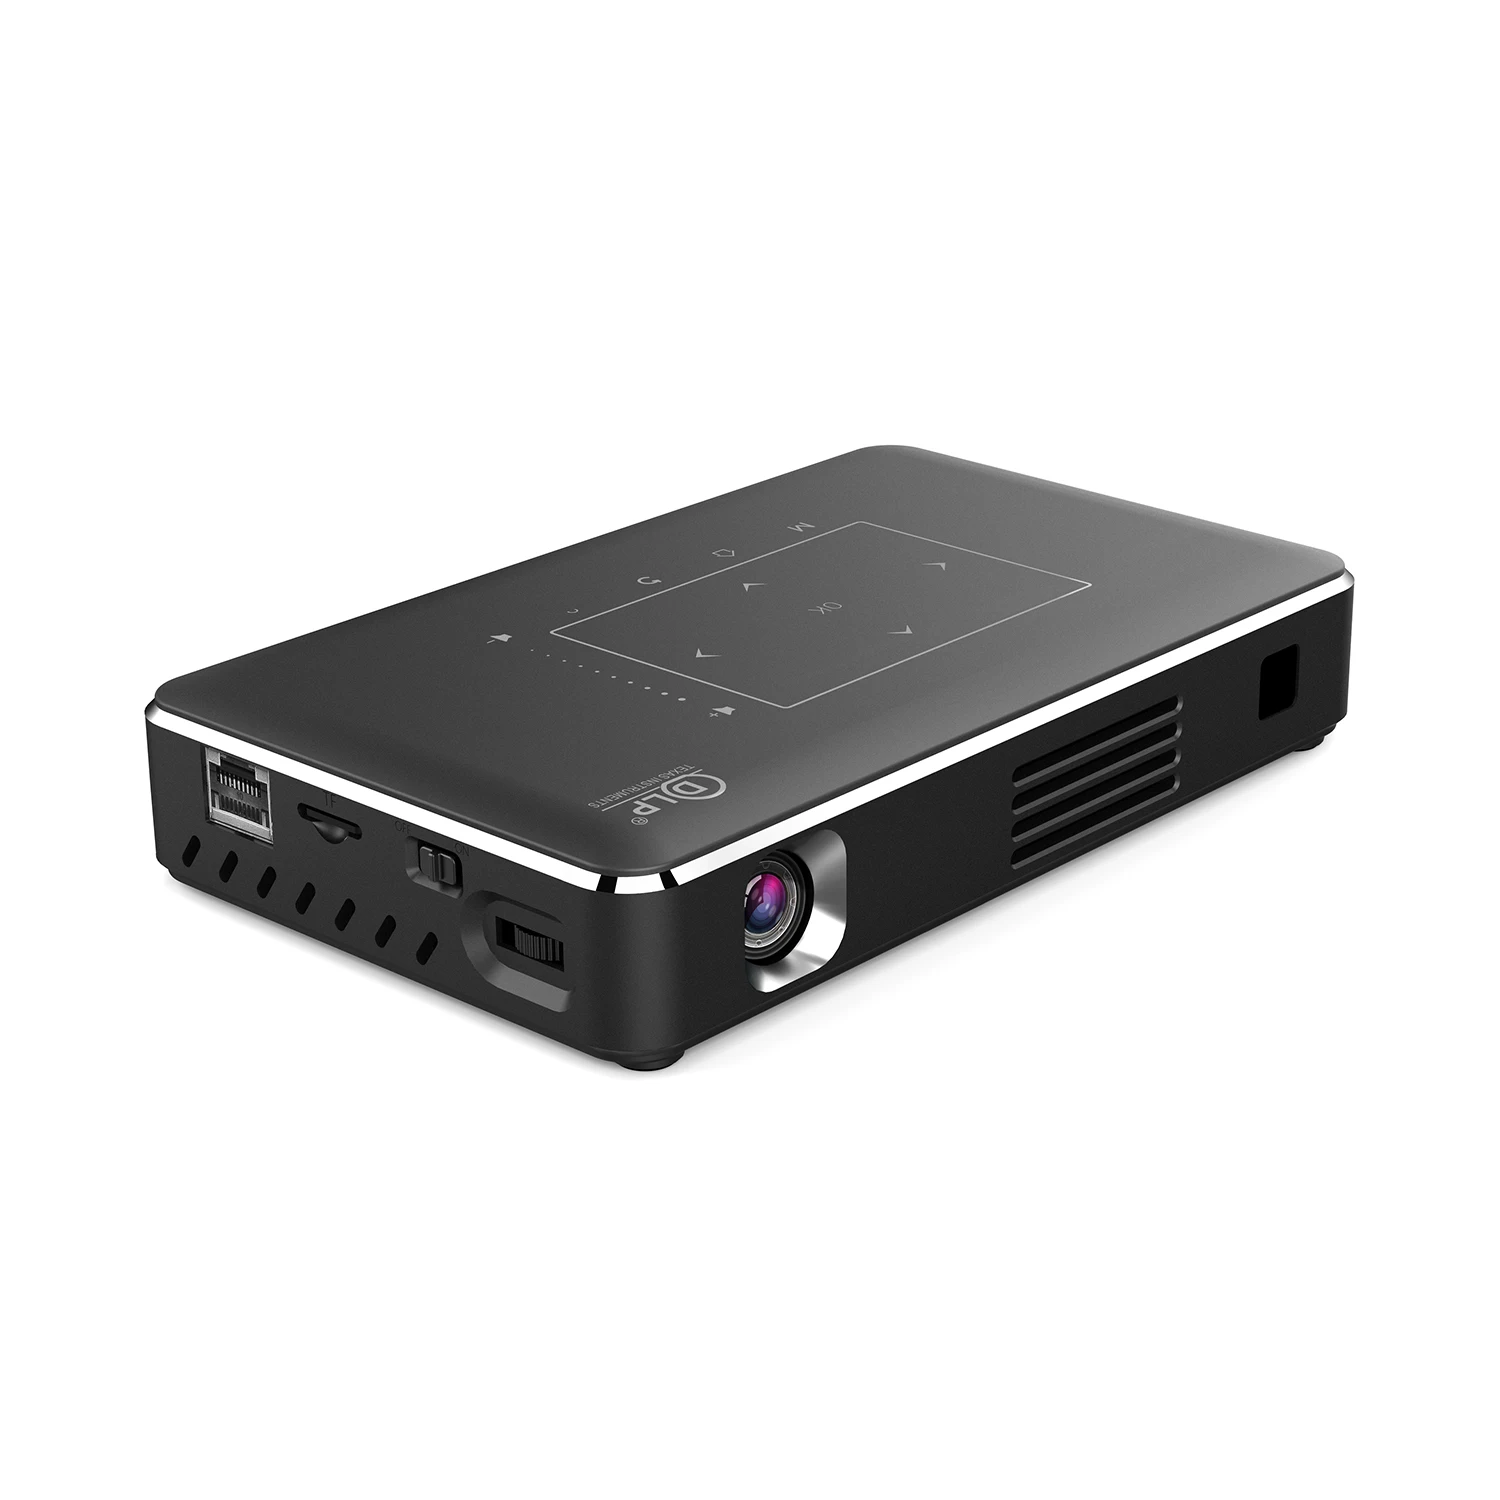 

2021 New product DLP P10-II Mini Pocket projector (WVGA 854*480) Outdoor Home Use Mini Projectors Video Projector, Gray+metallic gray